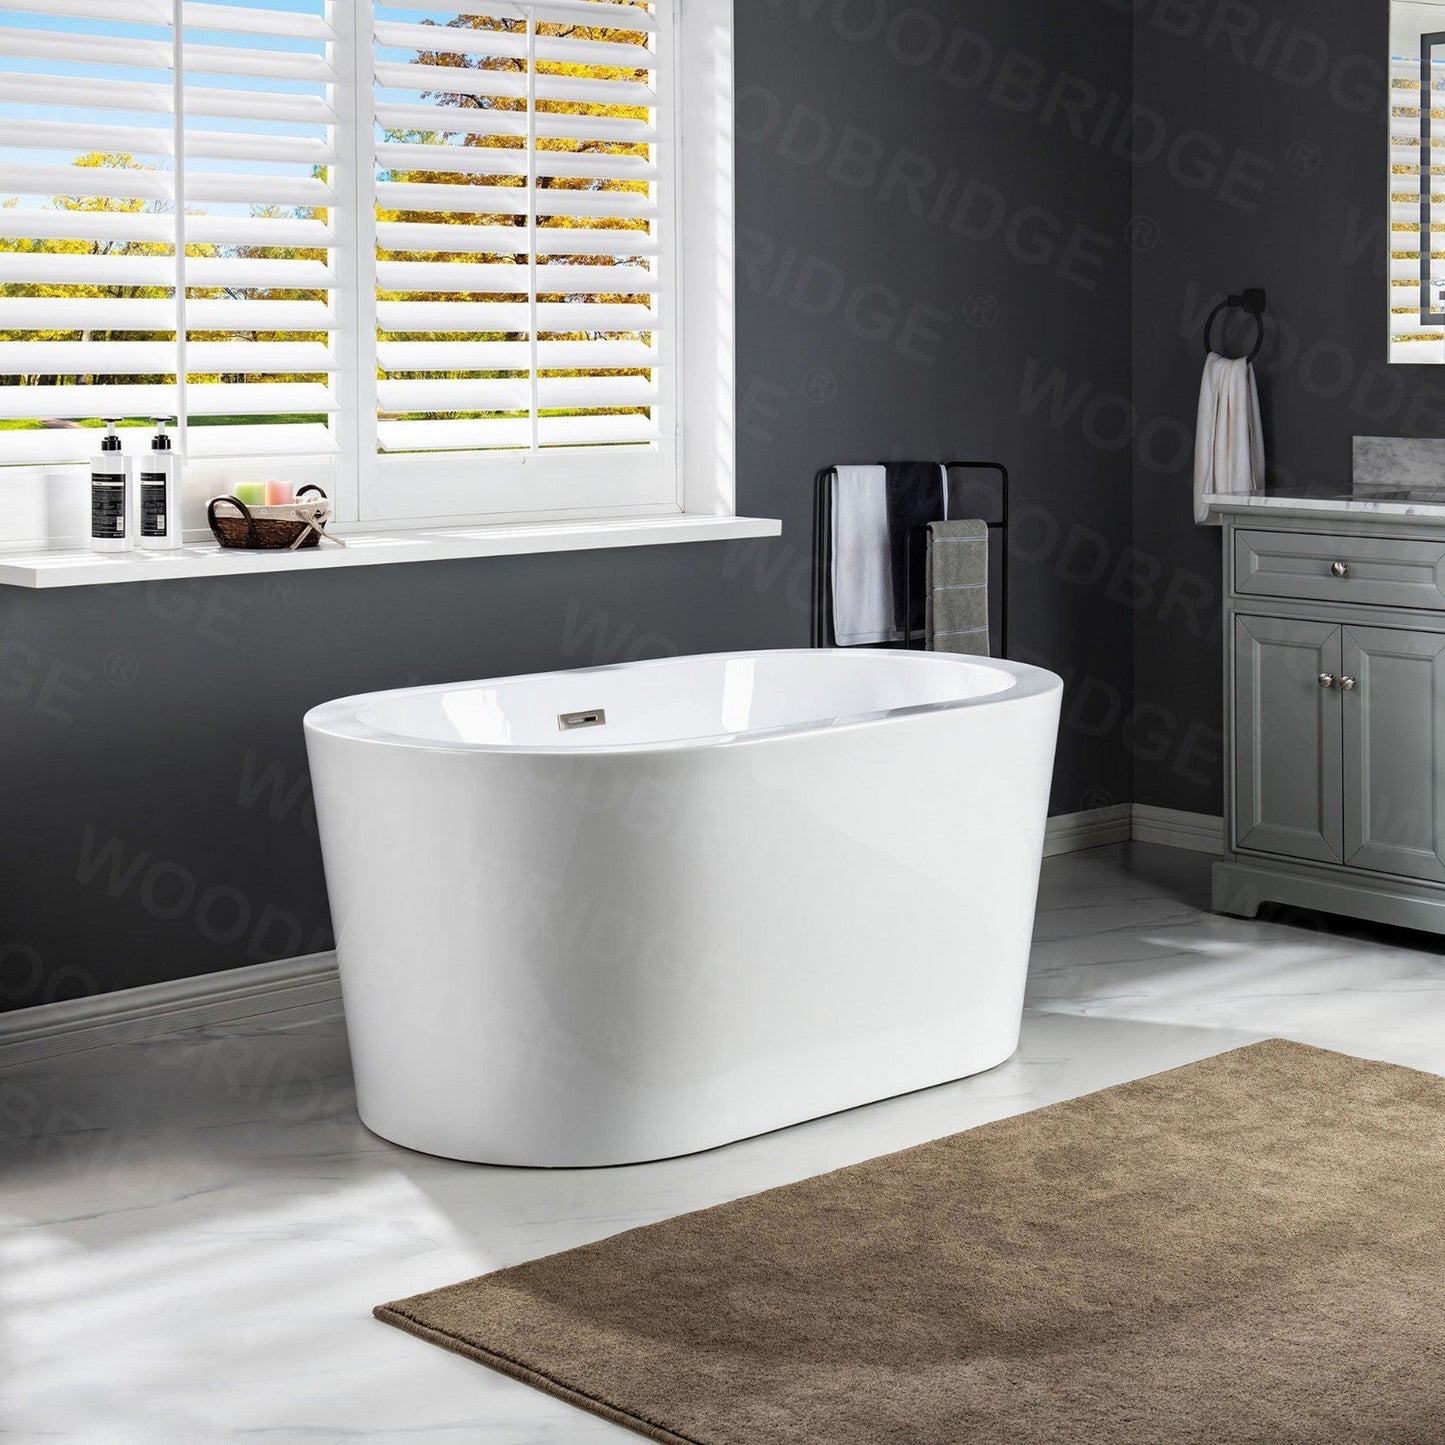 WoodBridge BTA0088 56" White Acrylic Freestanding Soaking Bathtub With Brushed Nickel Drain, Overflow, F0022 Tub Filler and Caddy Tray